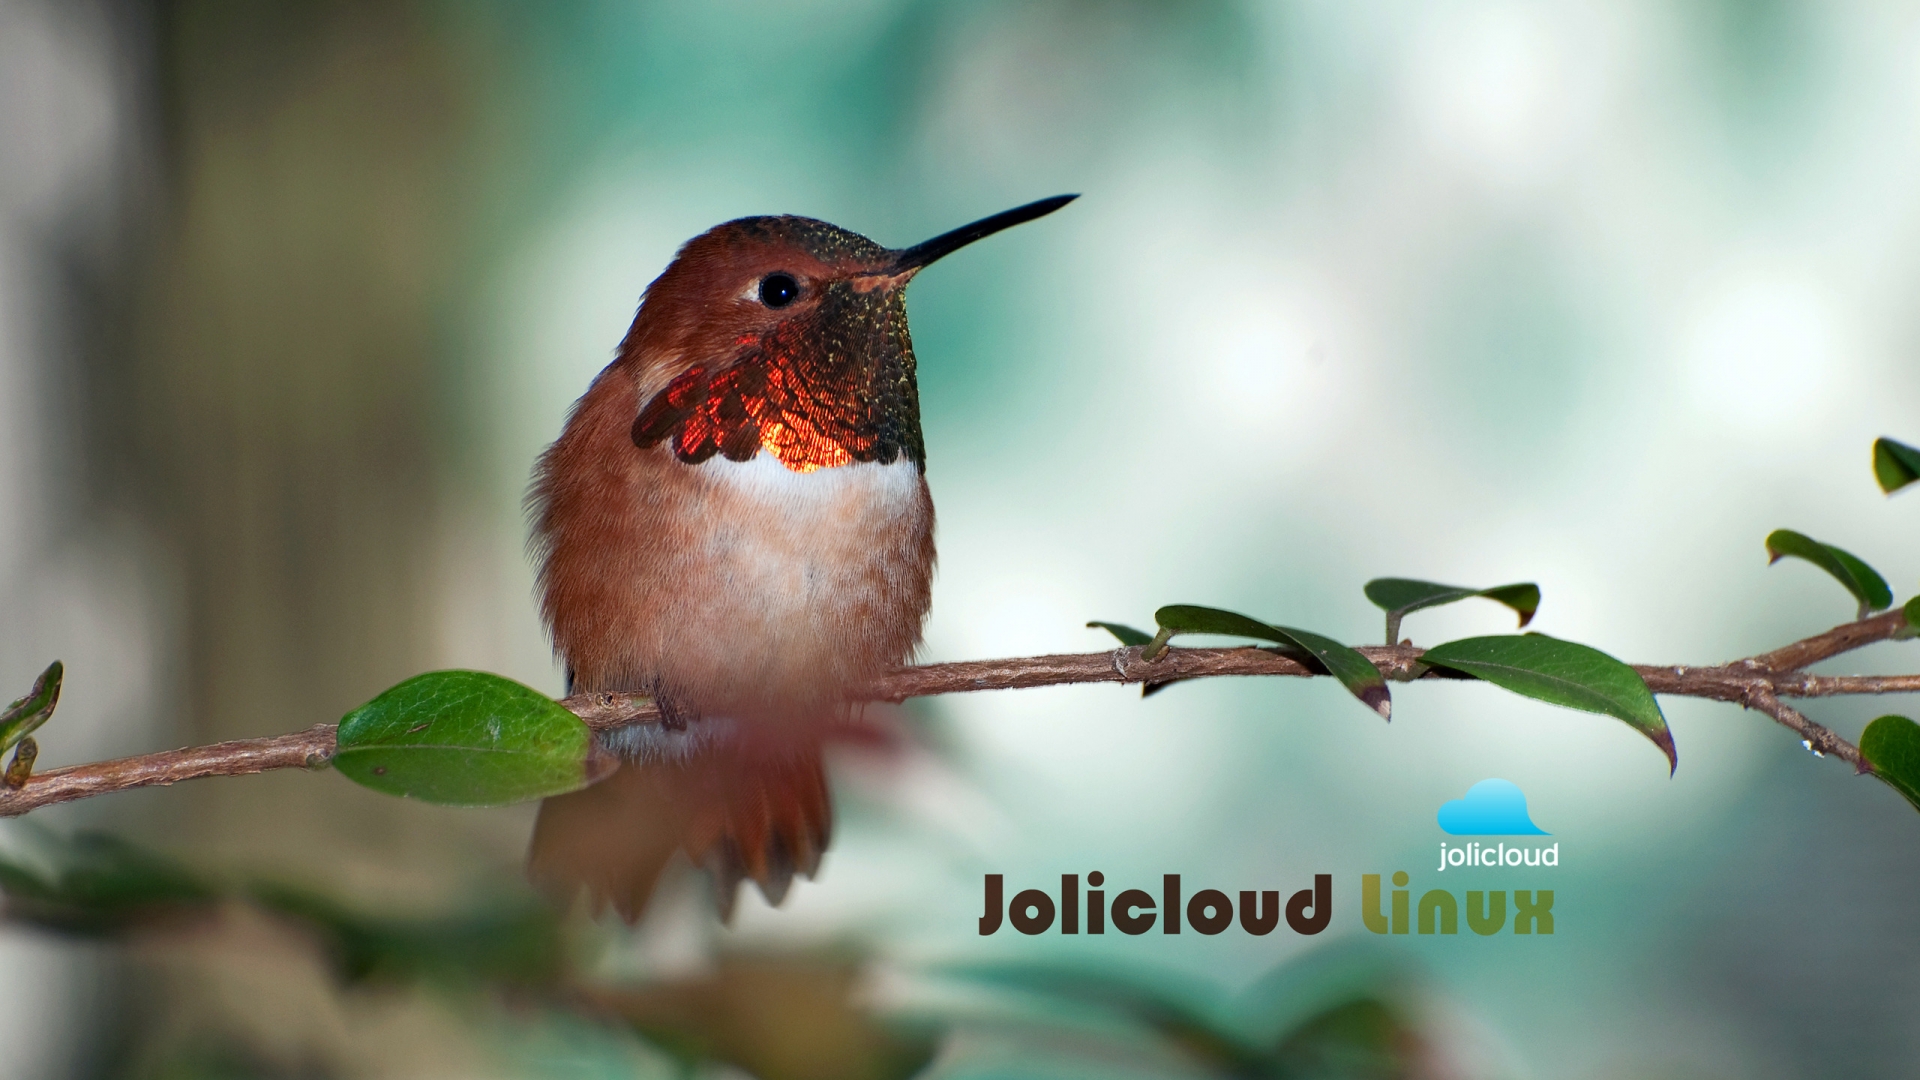 Jolicloud Linux Hummingbird for 1920 x 1080 HDTV 1080p resolution